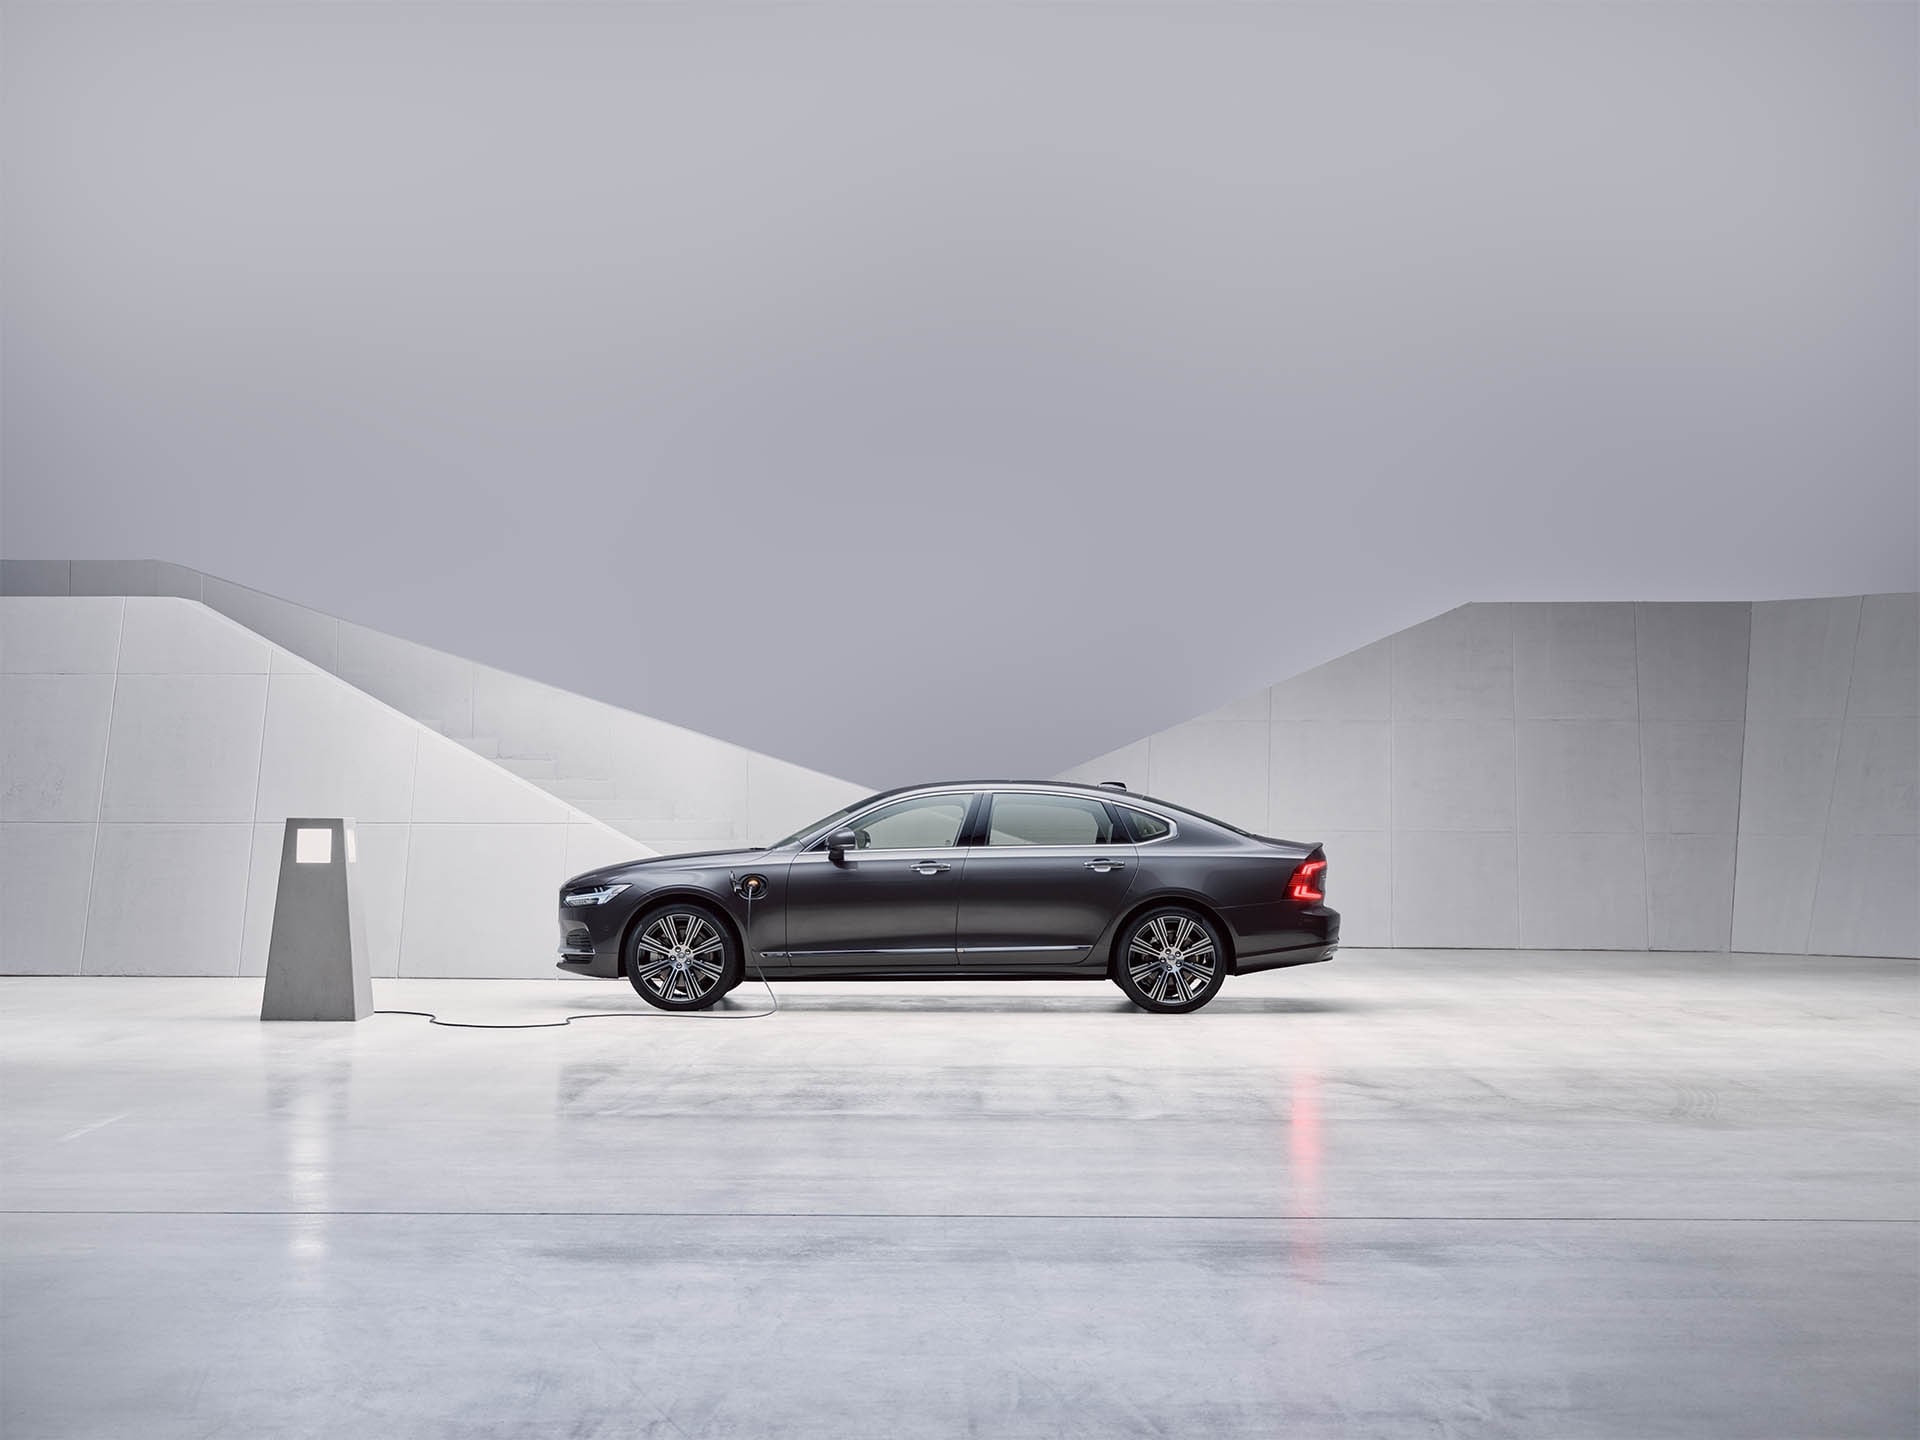 Volvo S90 Plugin Hybrid  สี Pebble Grey จอดนิ่งและกำลังชาร์จไฟอยู่